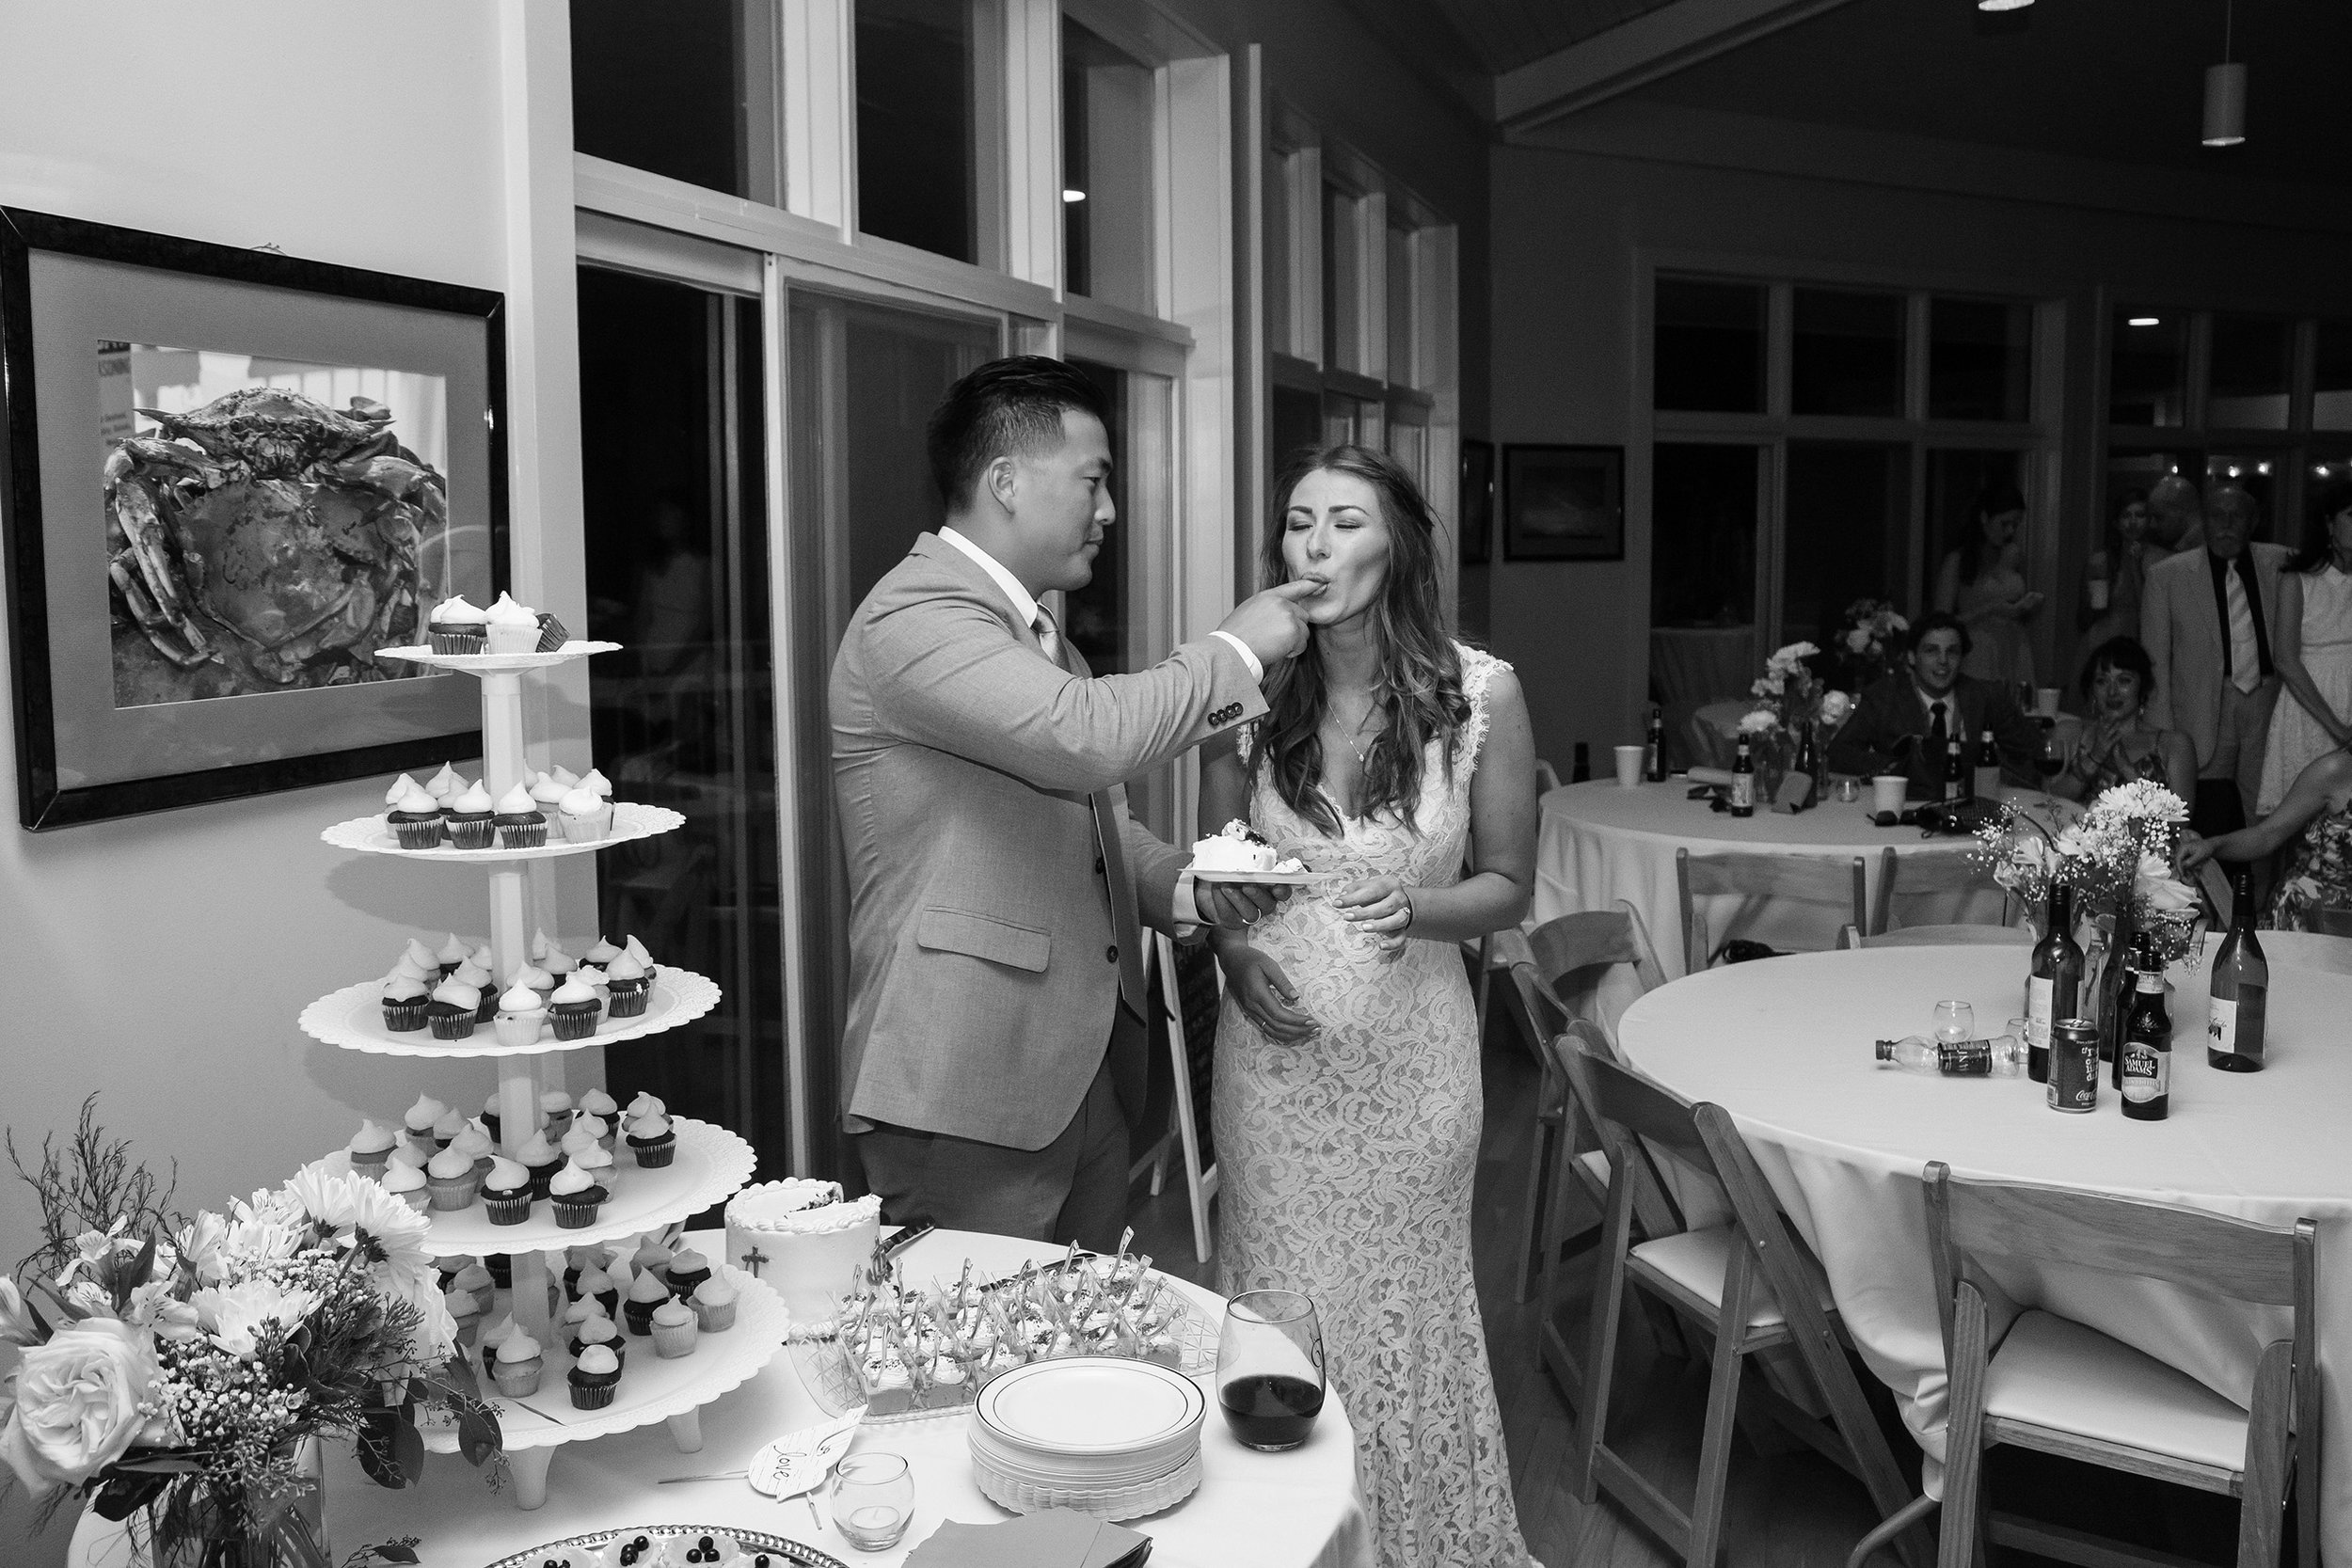 Cake cutting and groom feeding the bride